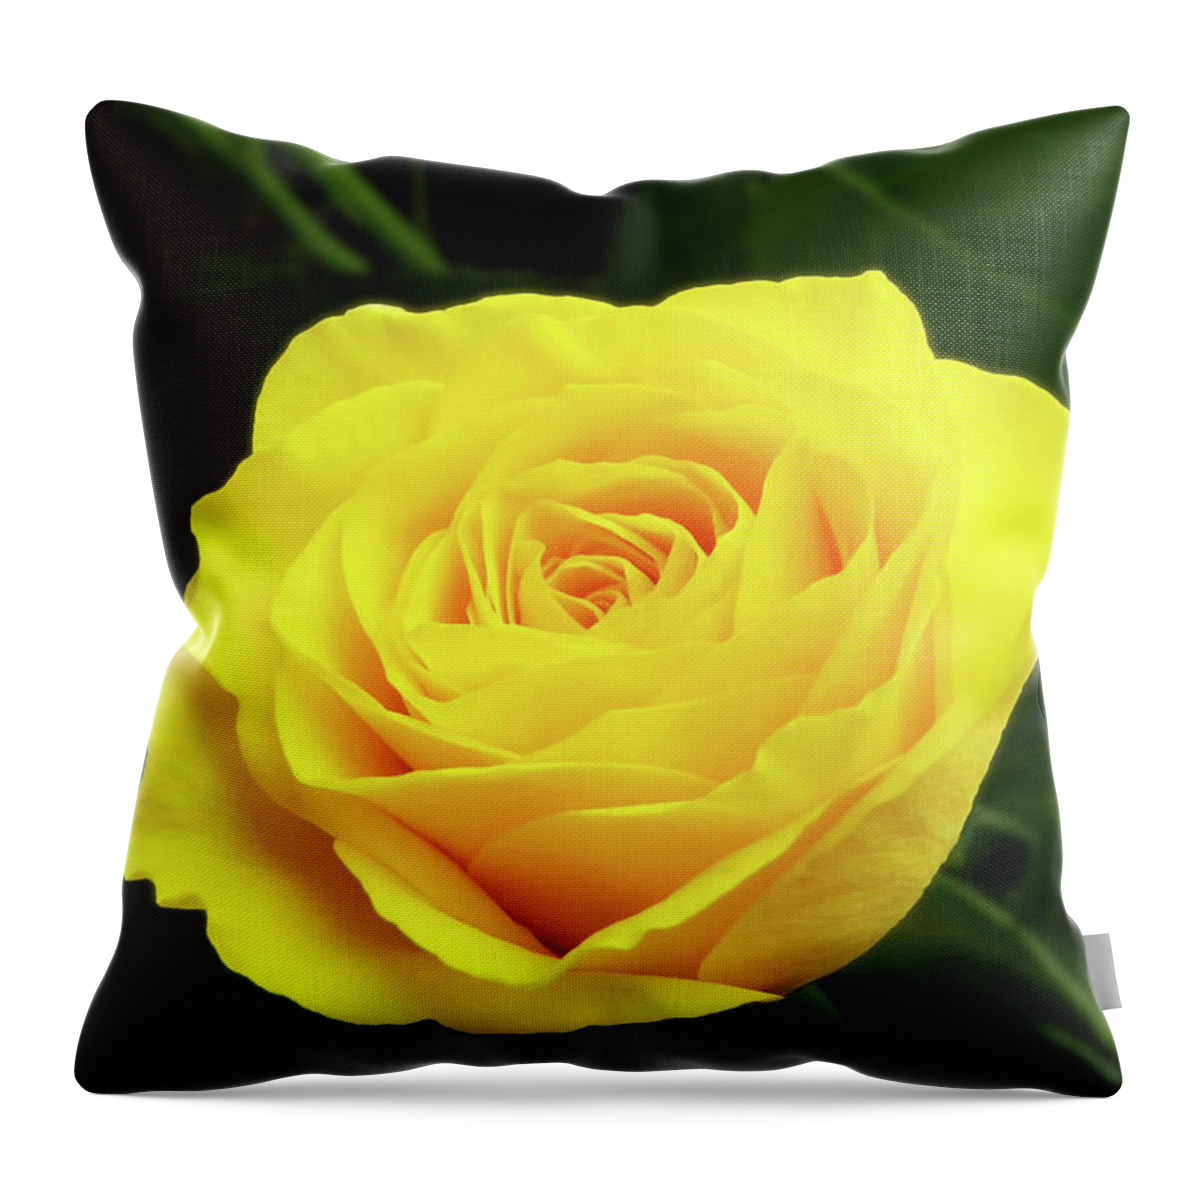 Rose Throw Pillow featuring the photograph Glorious Yellow Rose by Johanna Hurmerinta